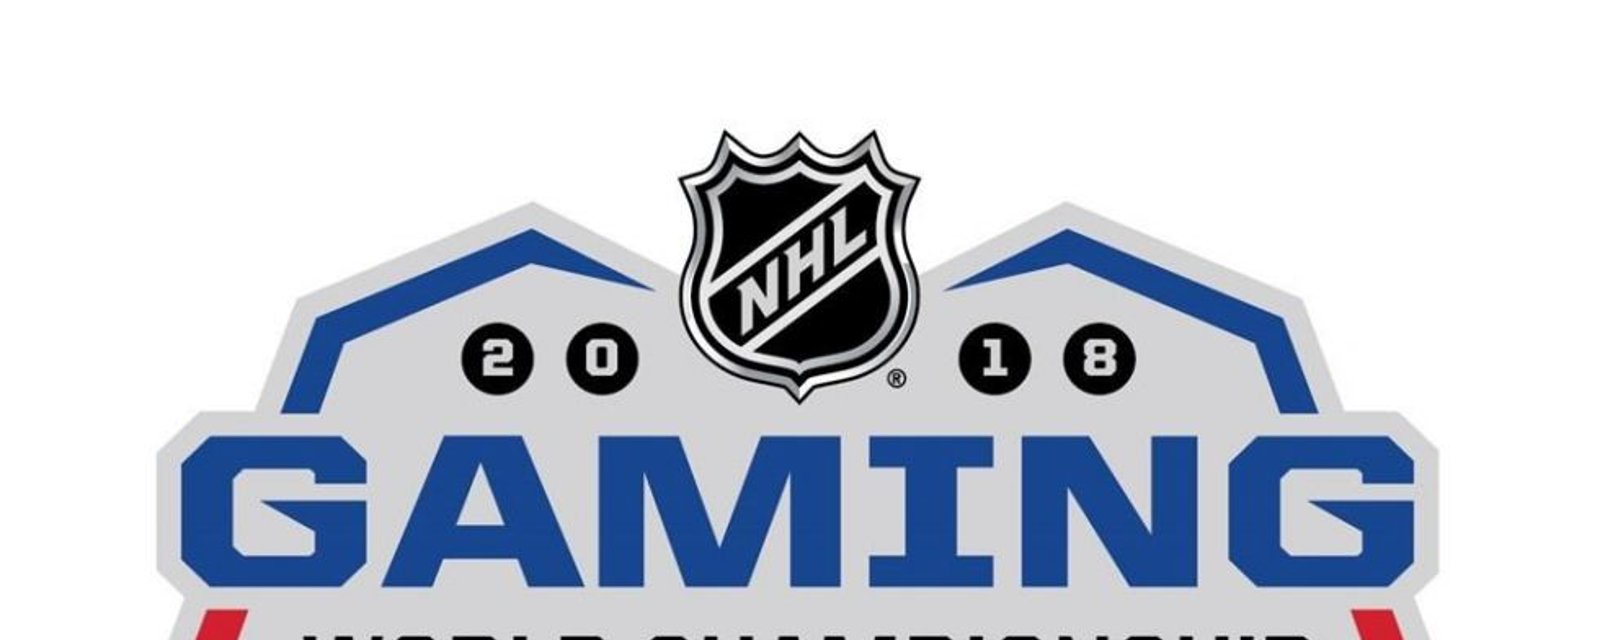 La LNH annonce un immense tournoi de NHL 18!